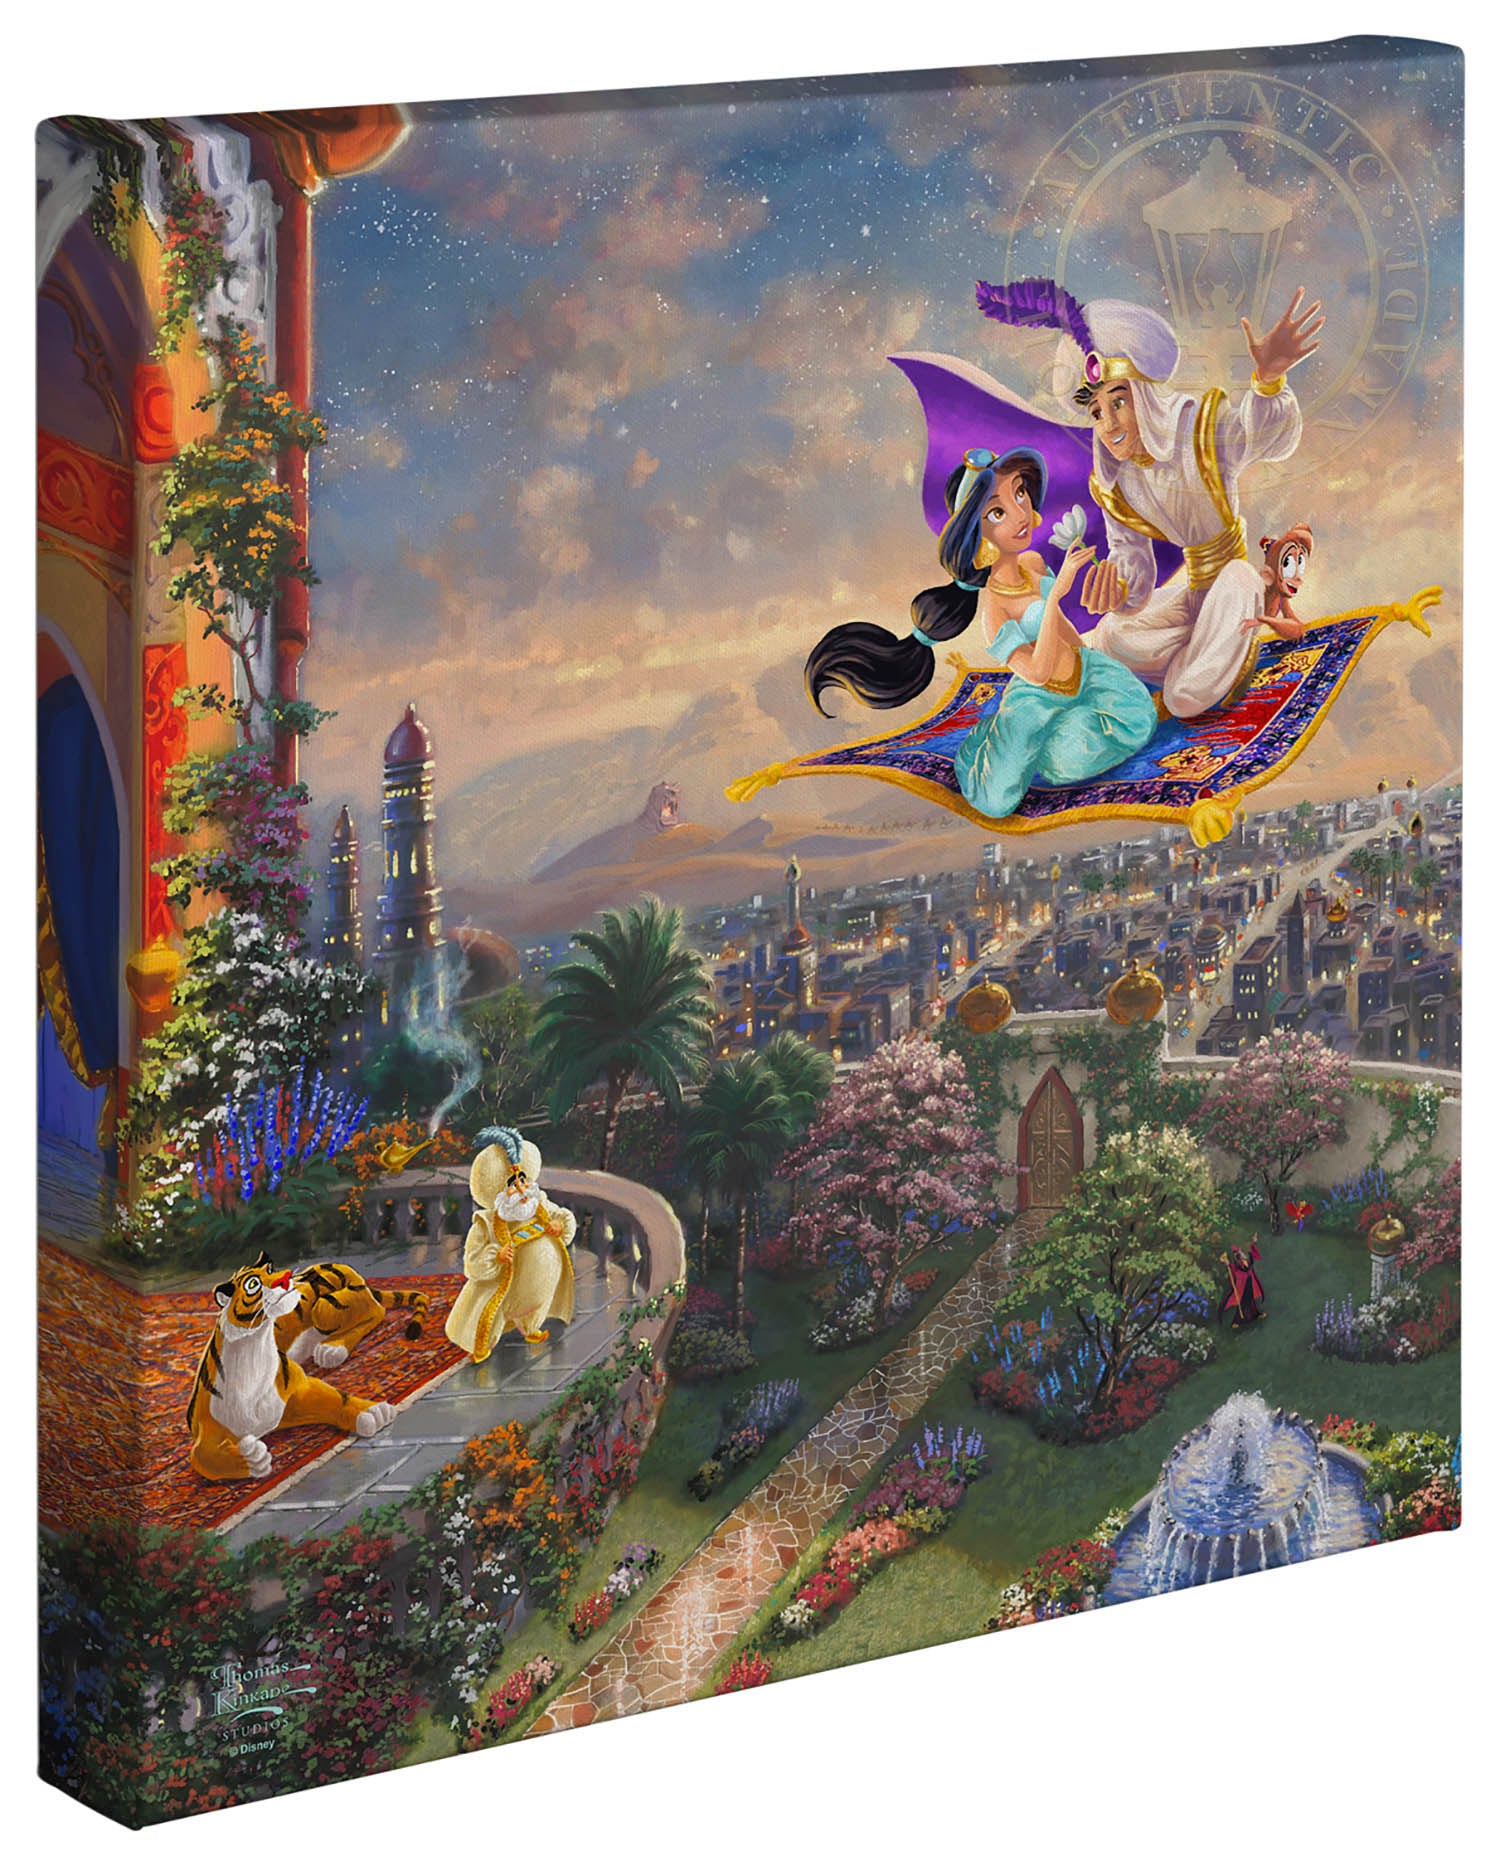 Aladdin by Thomas Kinkade – Art Center Gallery